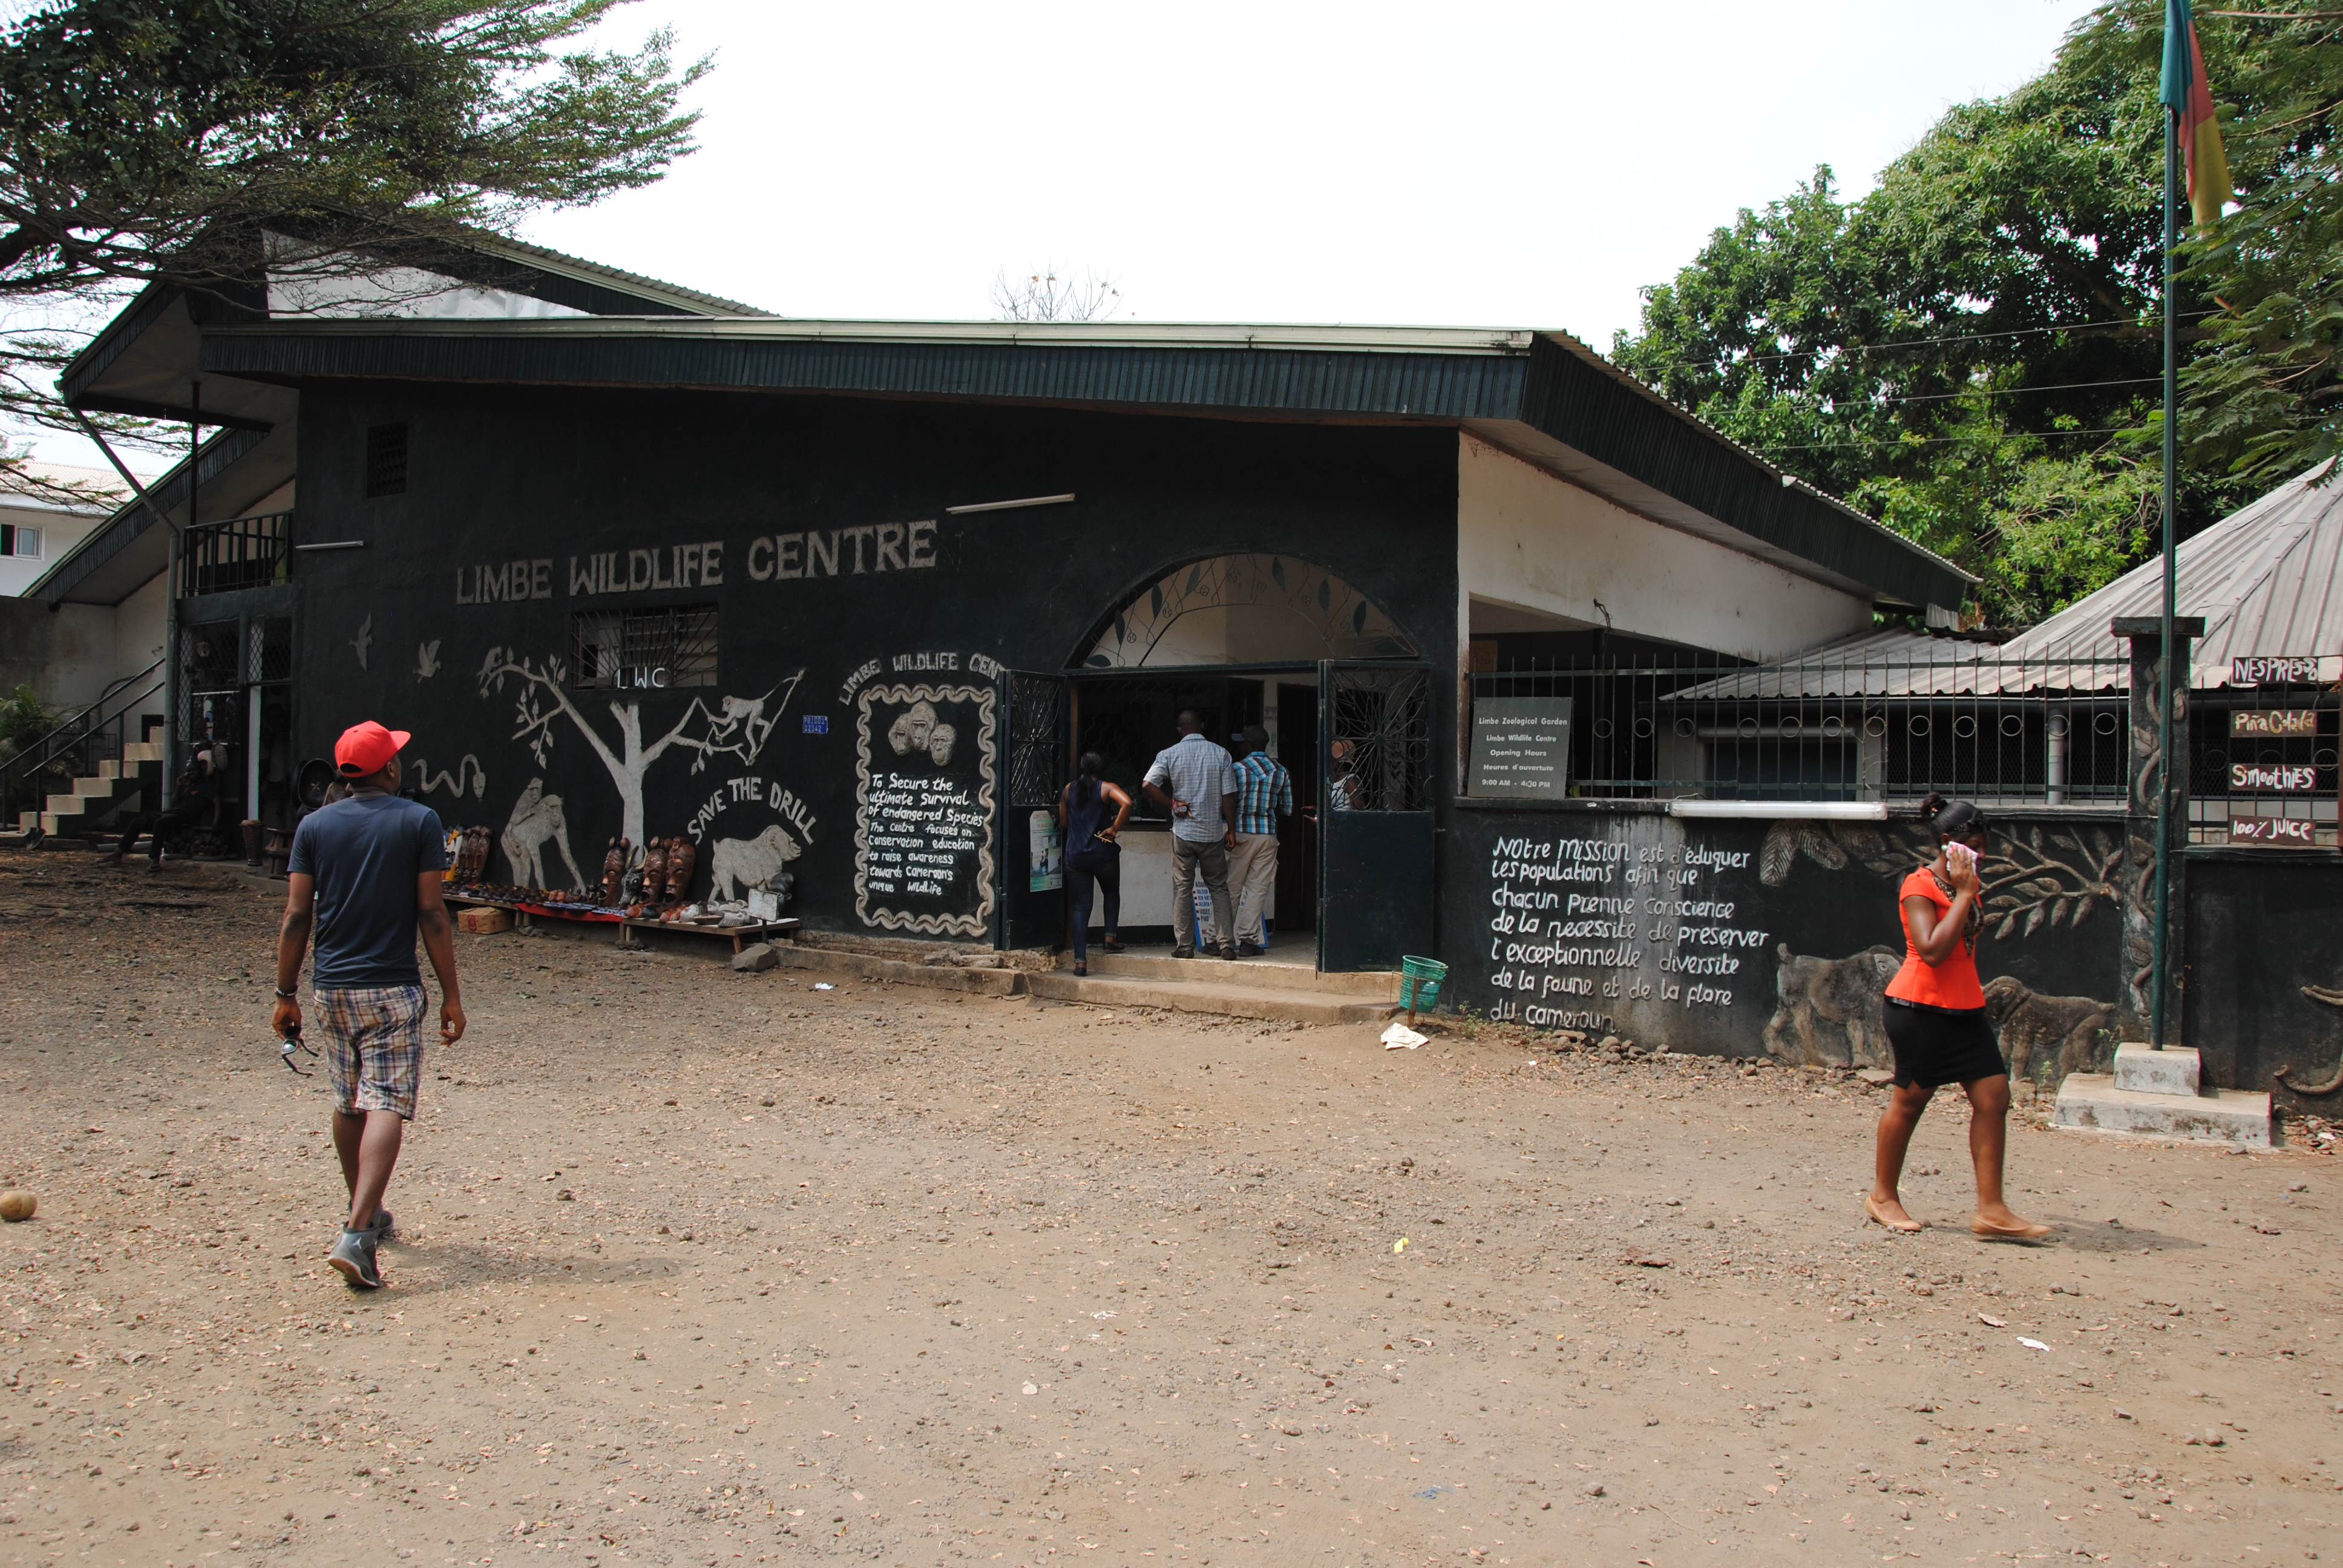 Limbe wildlife center